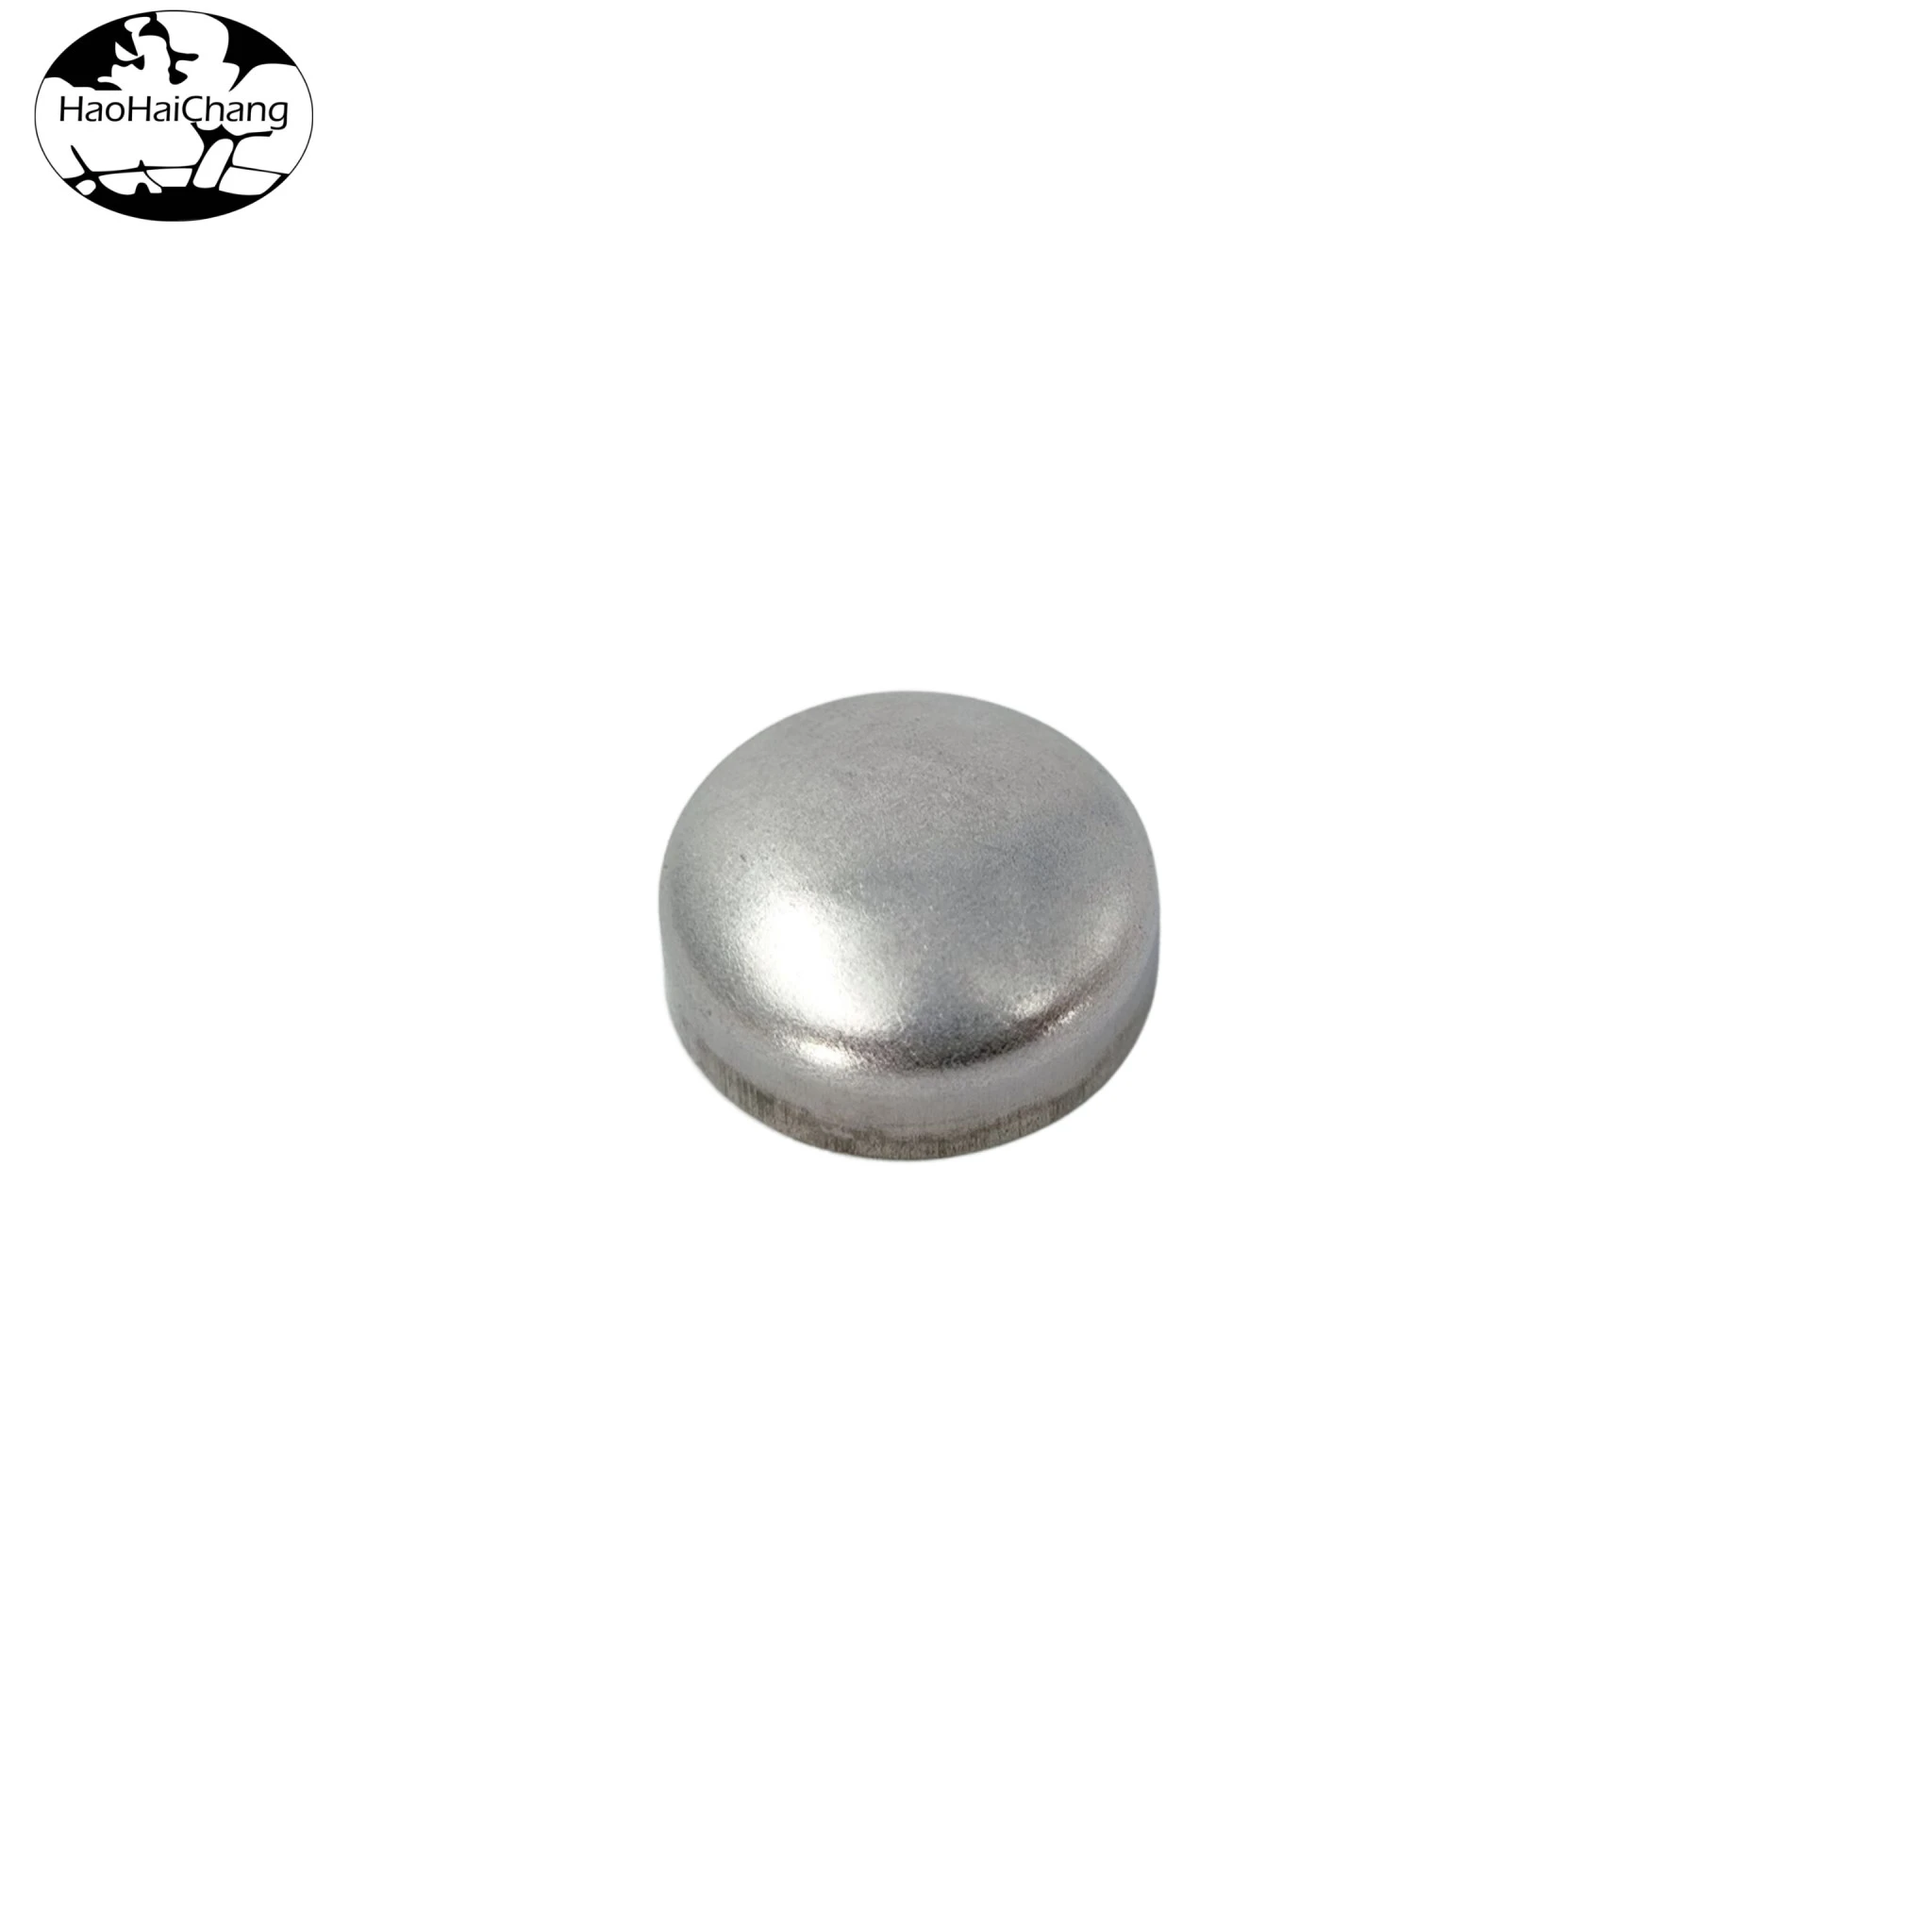 HHC-210 Plug tube cap end cap seal protective shell